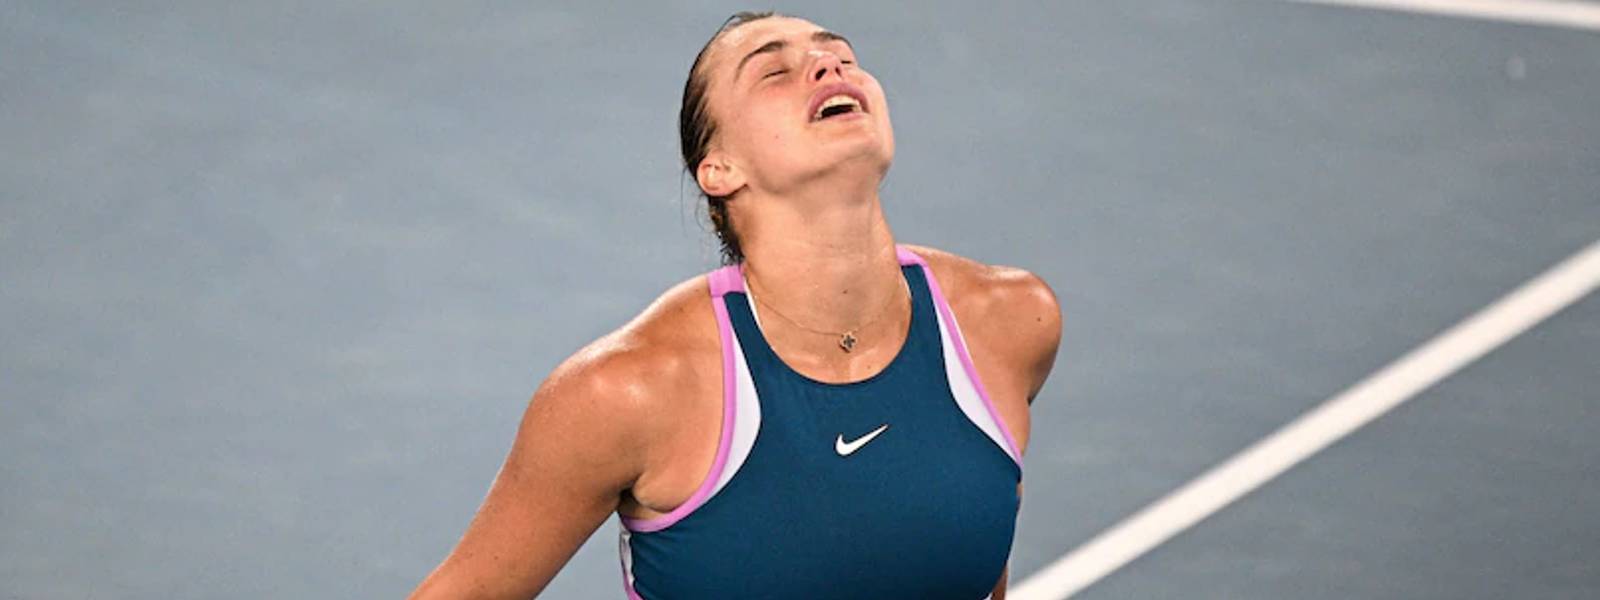 Aryna Sabalenka of Belarus wins the Australian Open over Elena Rybakina of Kazakhstan, her first Grand Slam Tennis Singles title